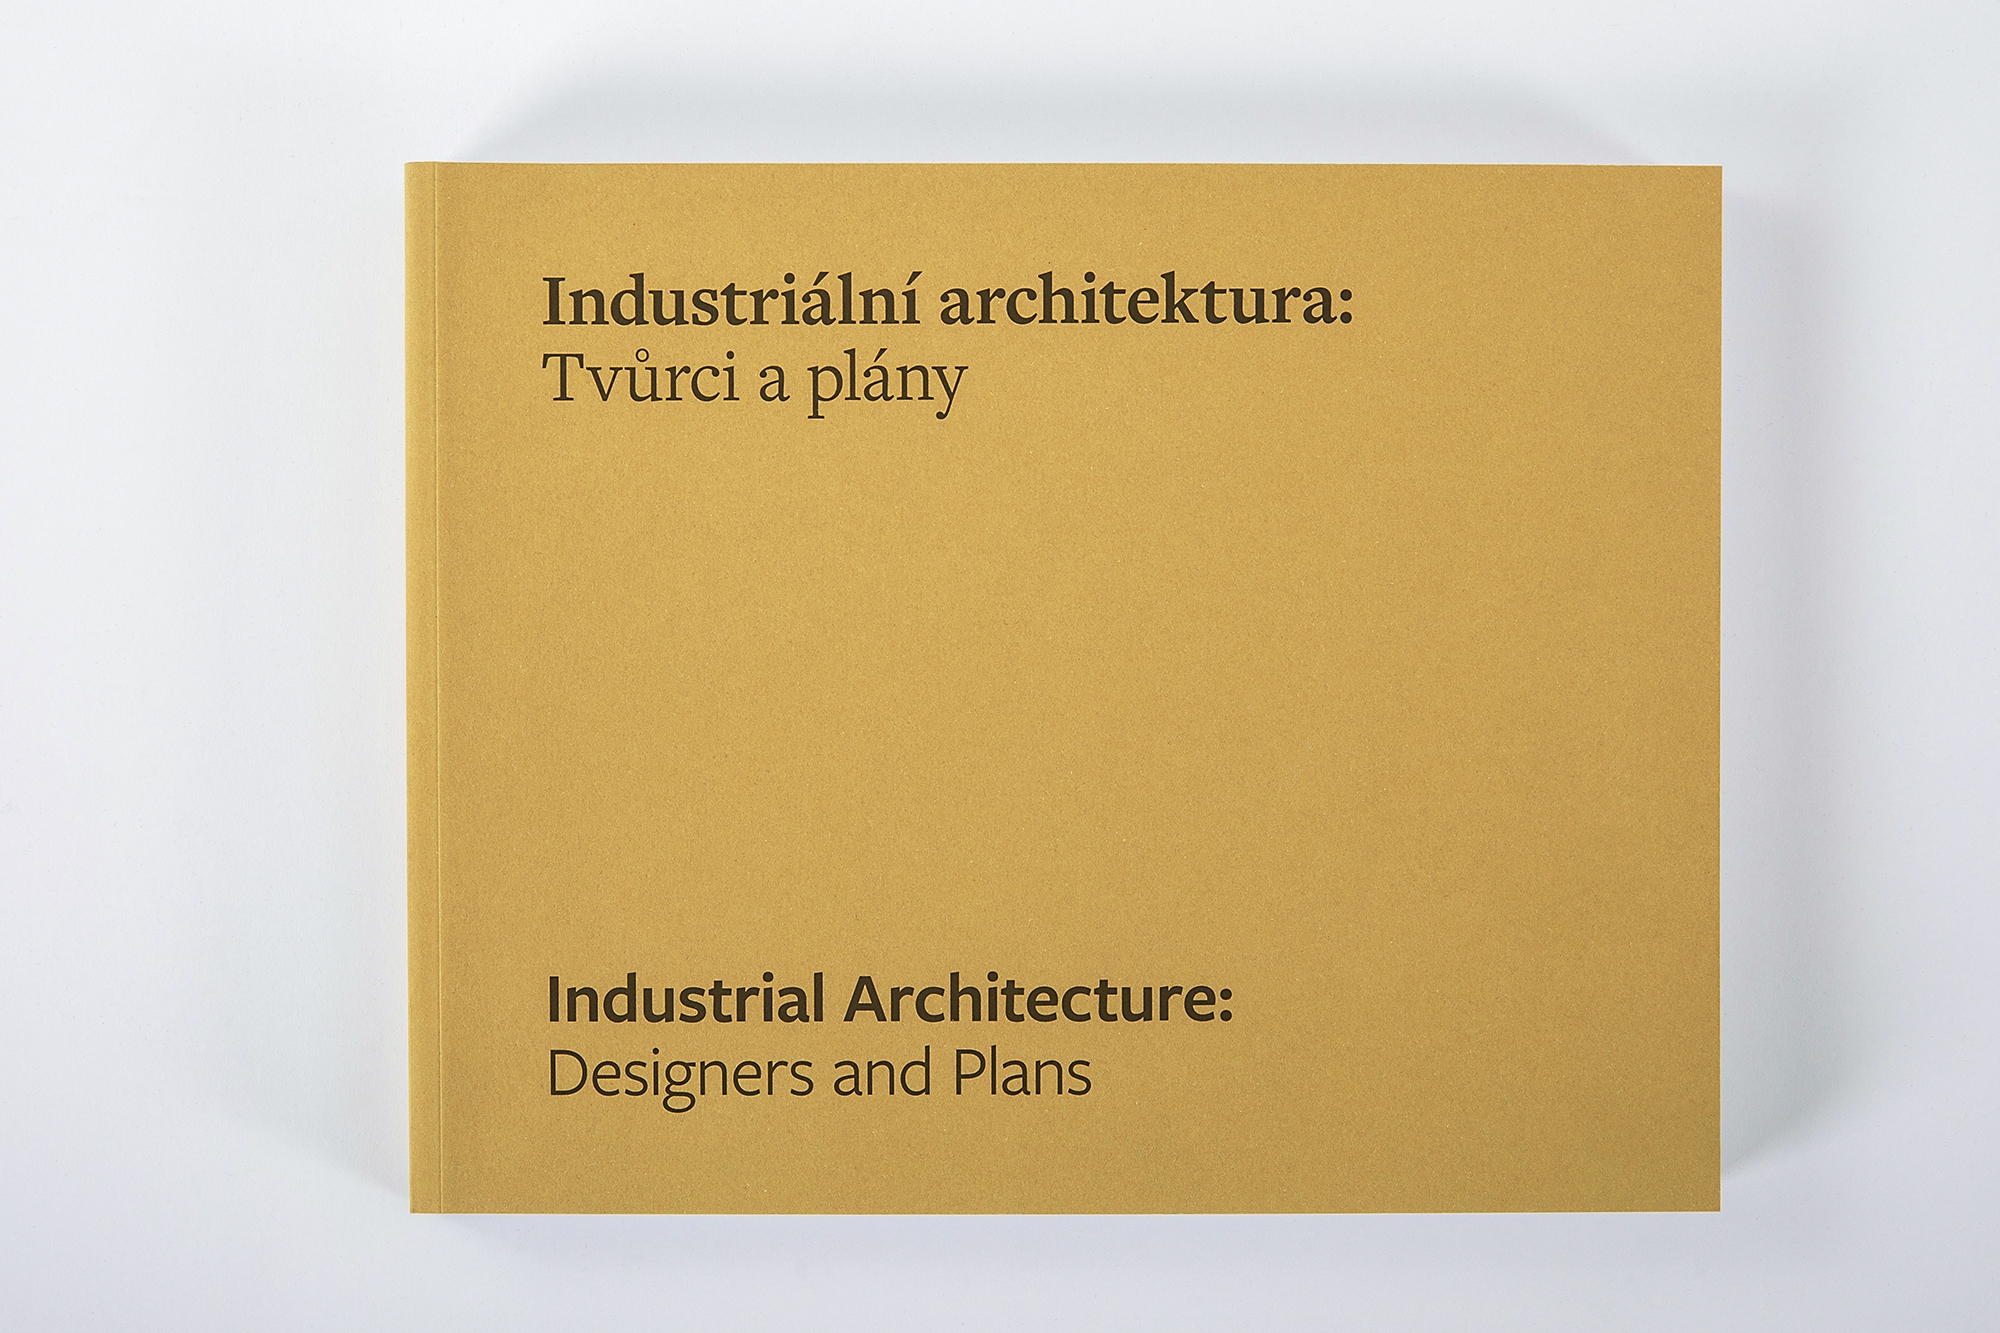 industrialni_architektura-tvurci_a_plany-01-foto_gabriel_fragner